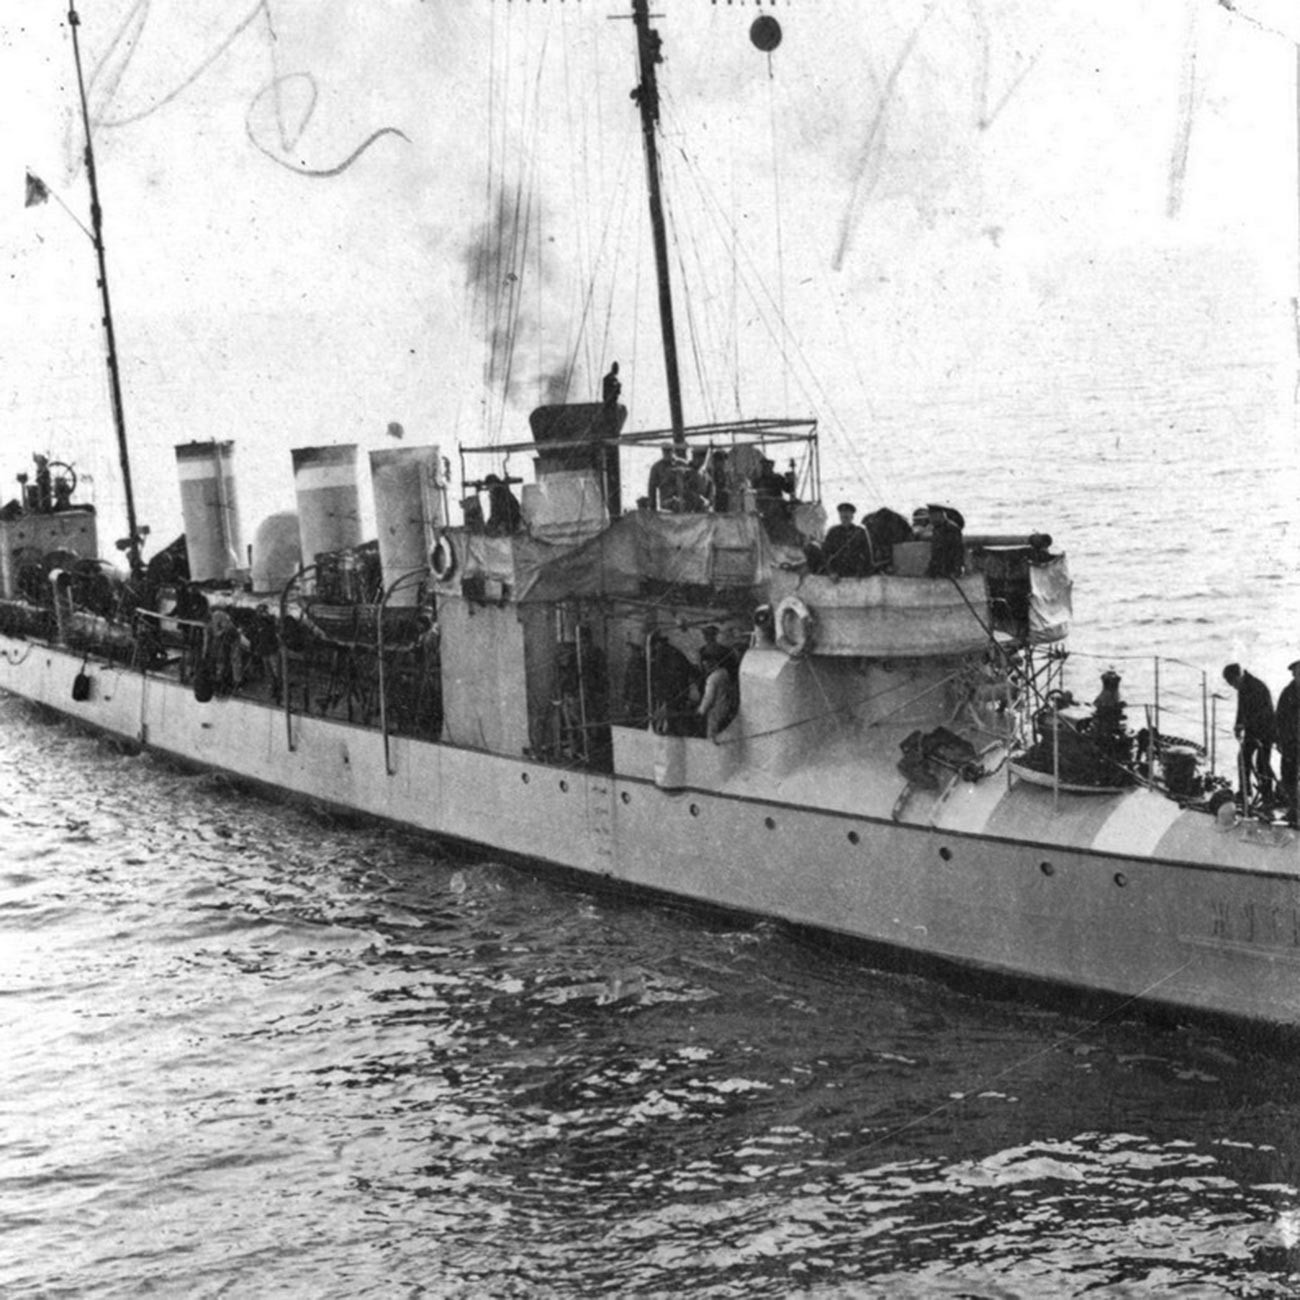 Destroyer Zhutky (Terrible) in 1915.